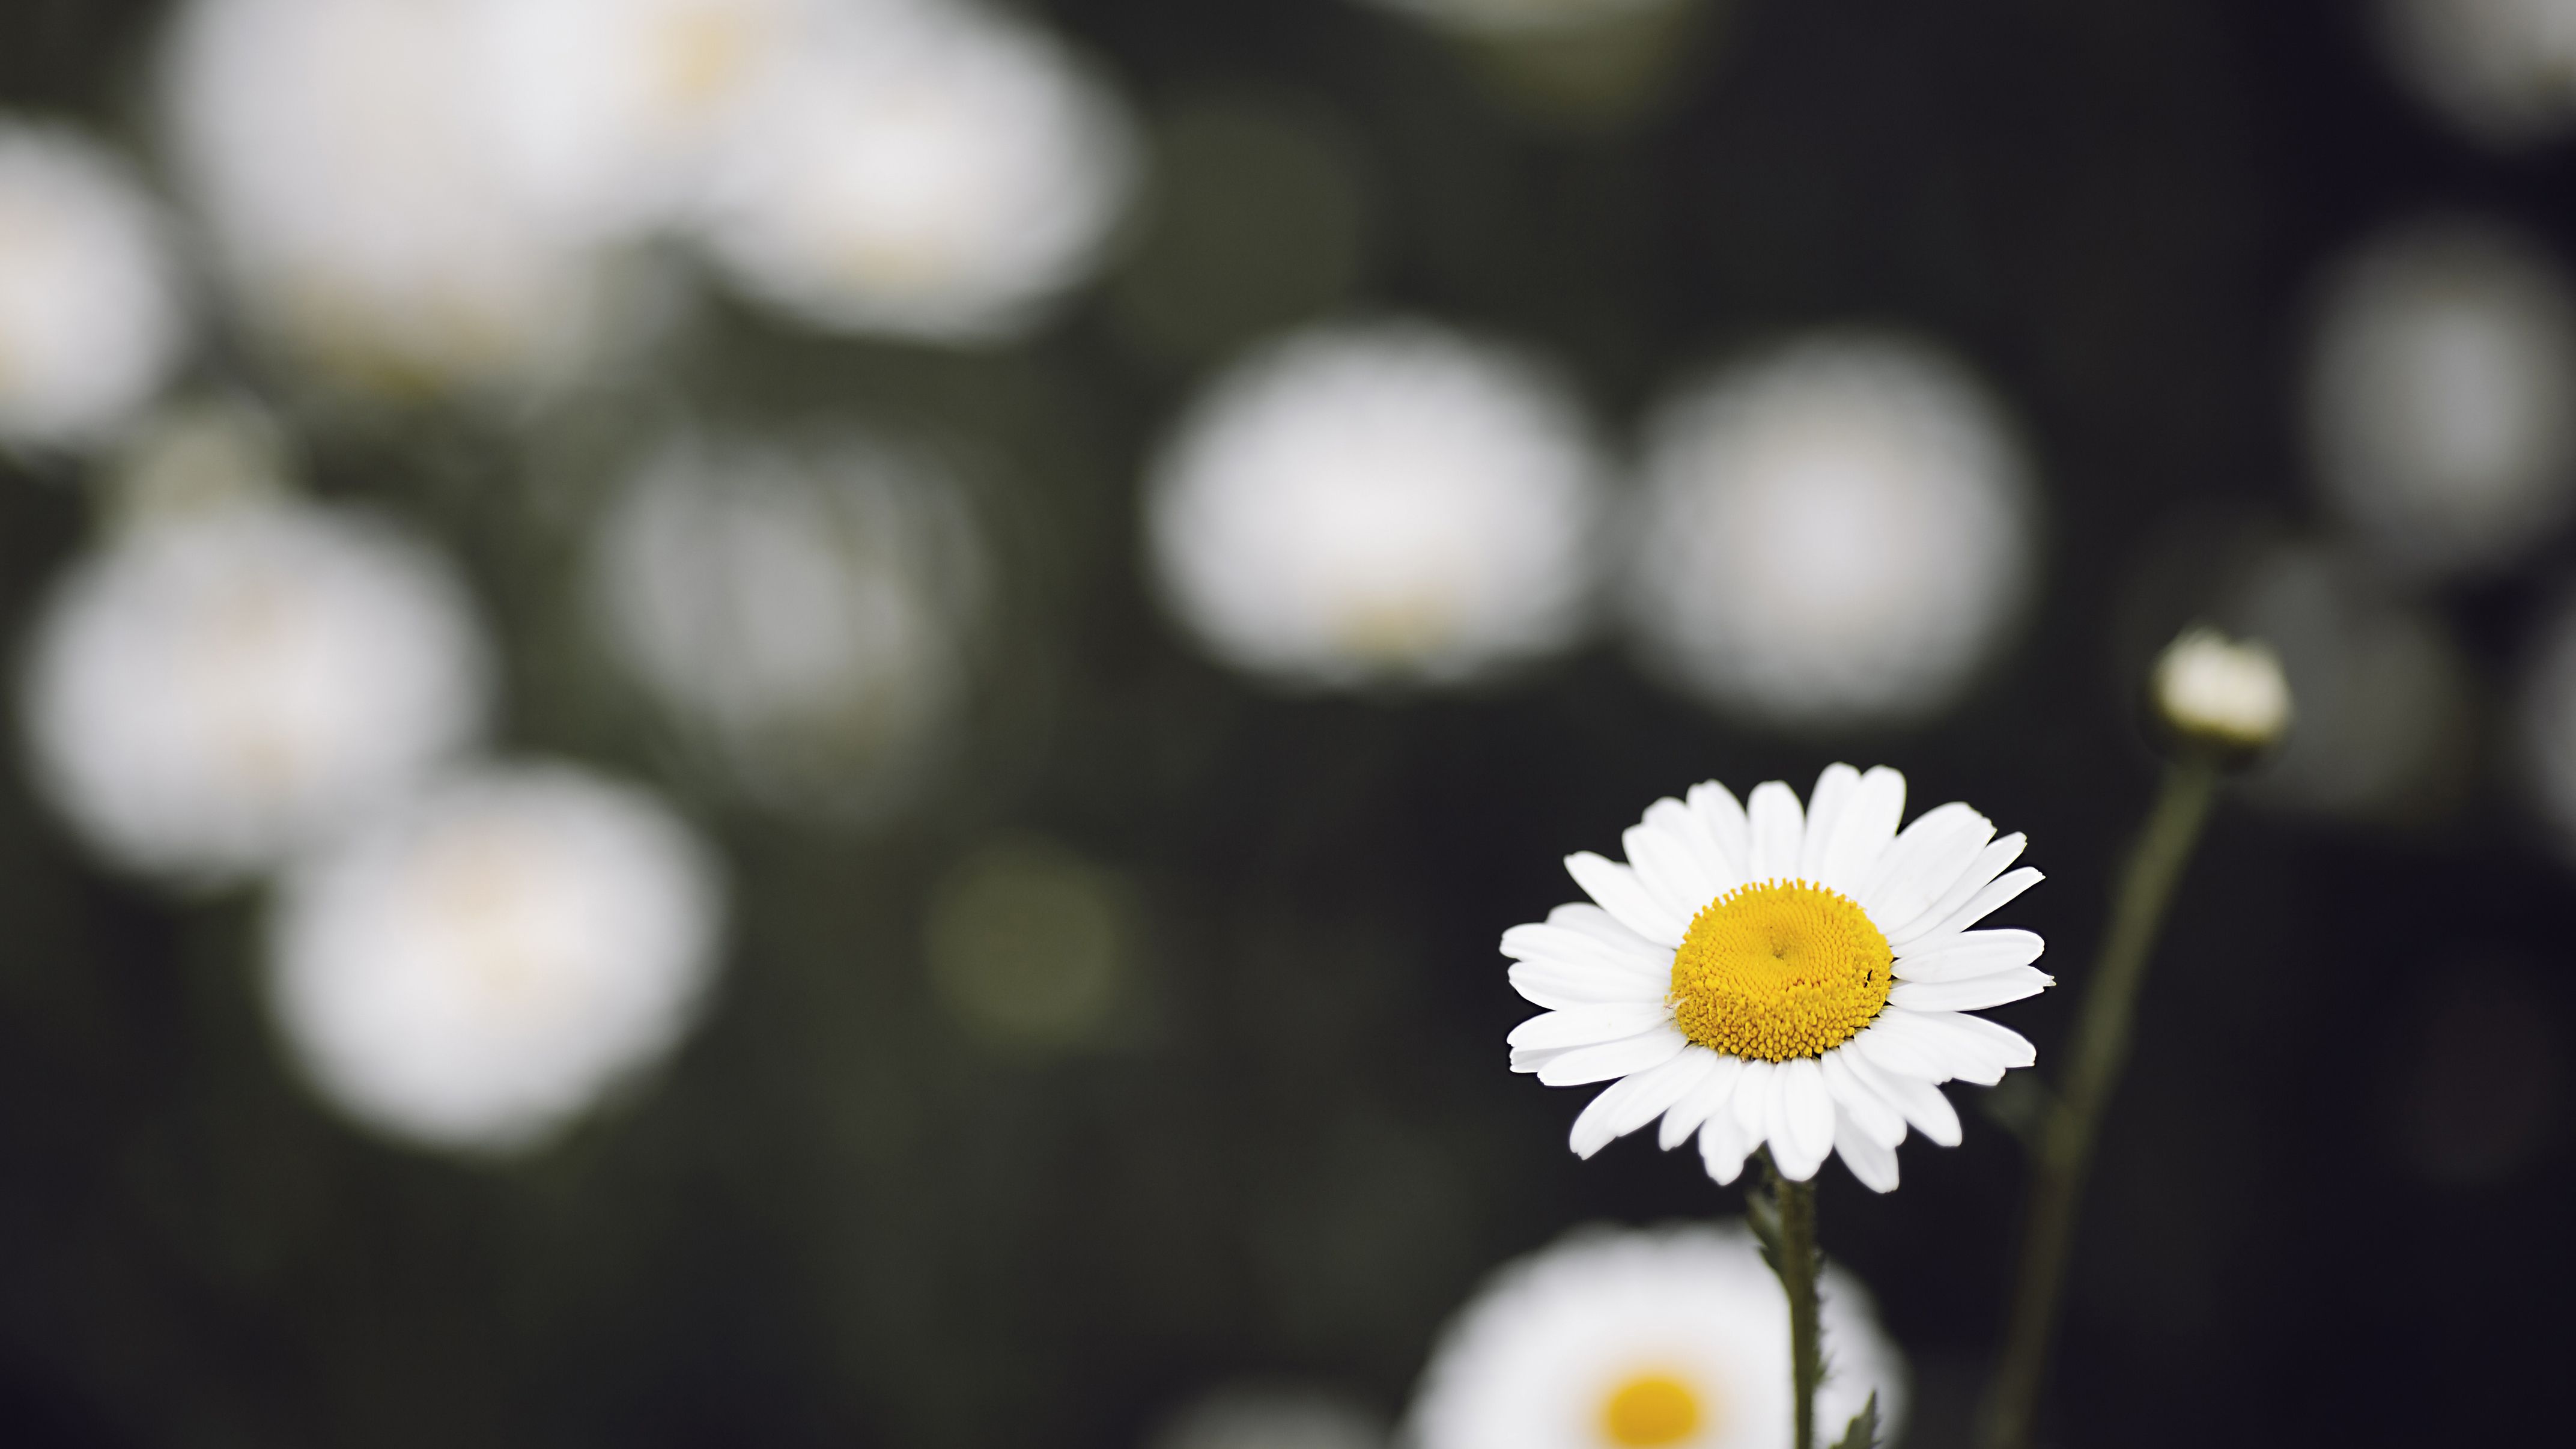 Daisy Flowers Wallpaper Full HD Free Download